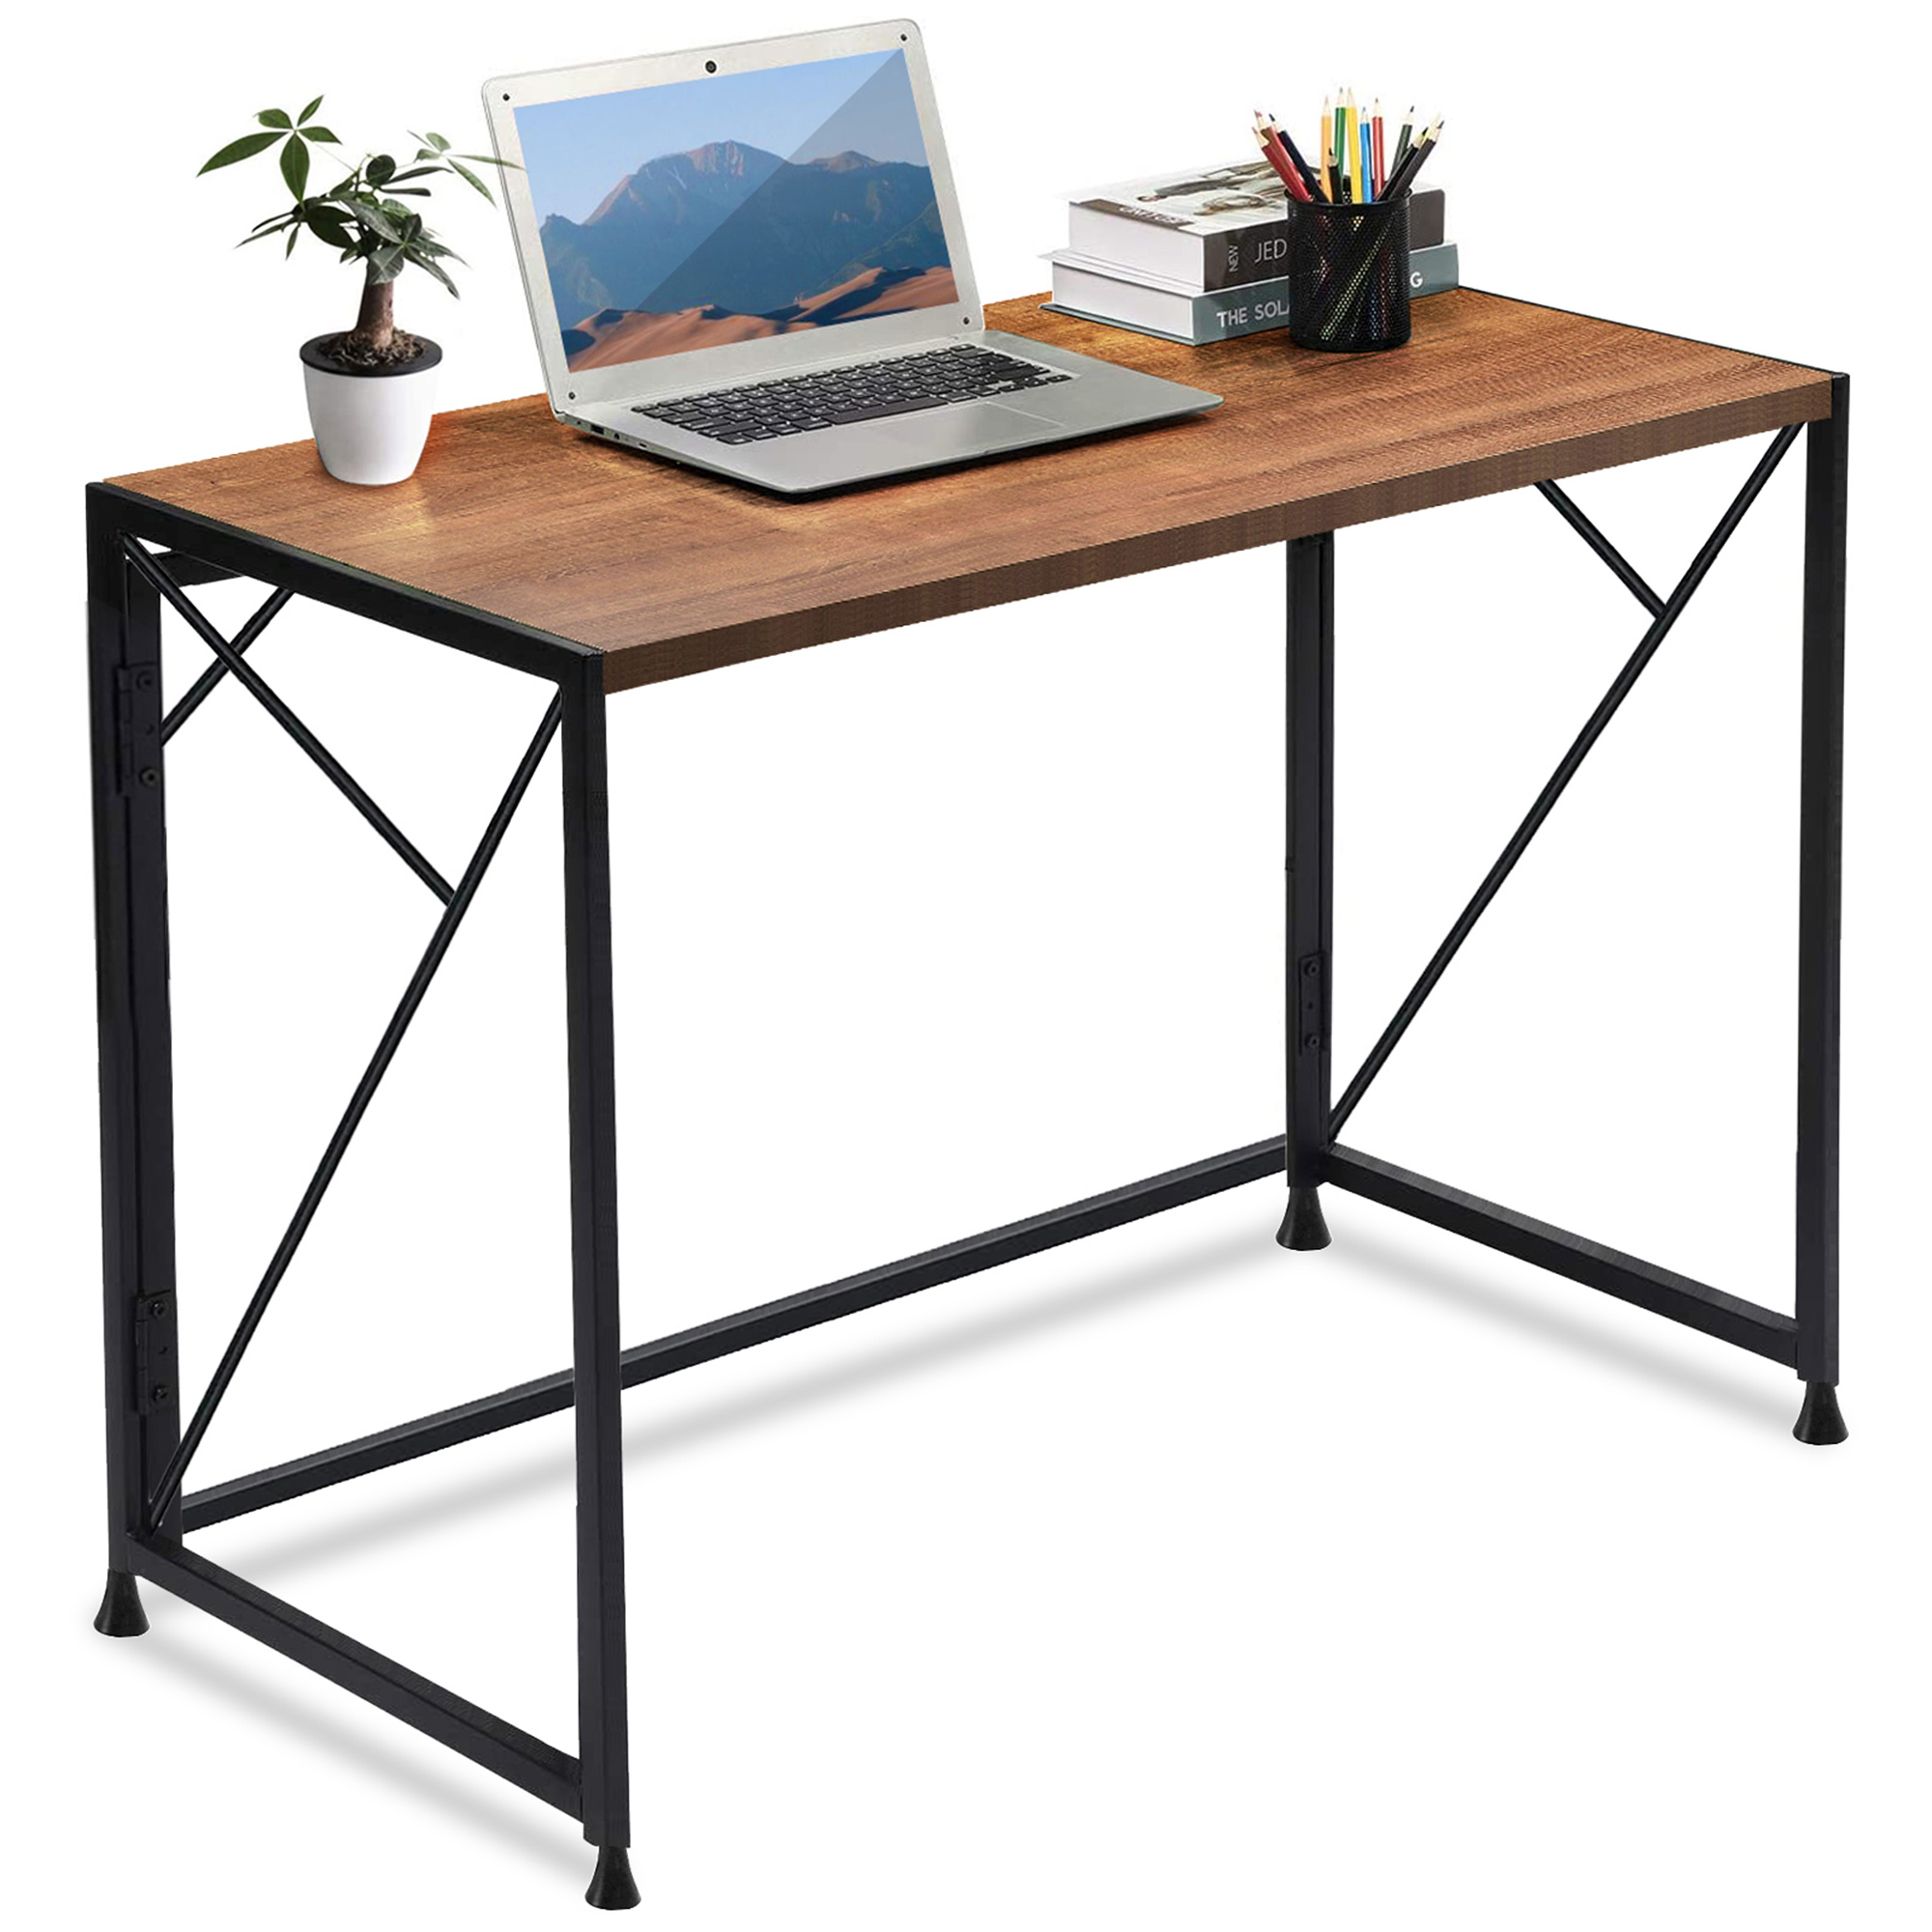 Folding Desk HUGE Price Drop Online at Walmart!